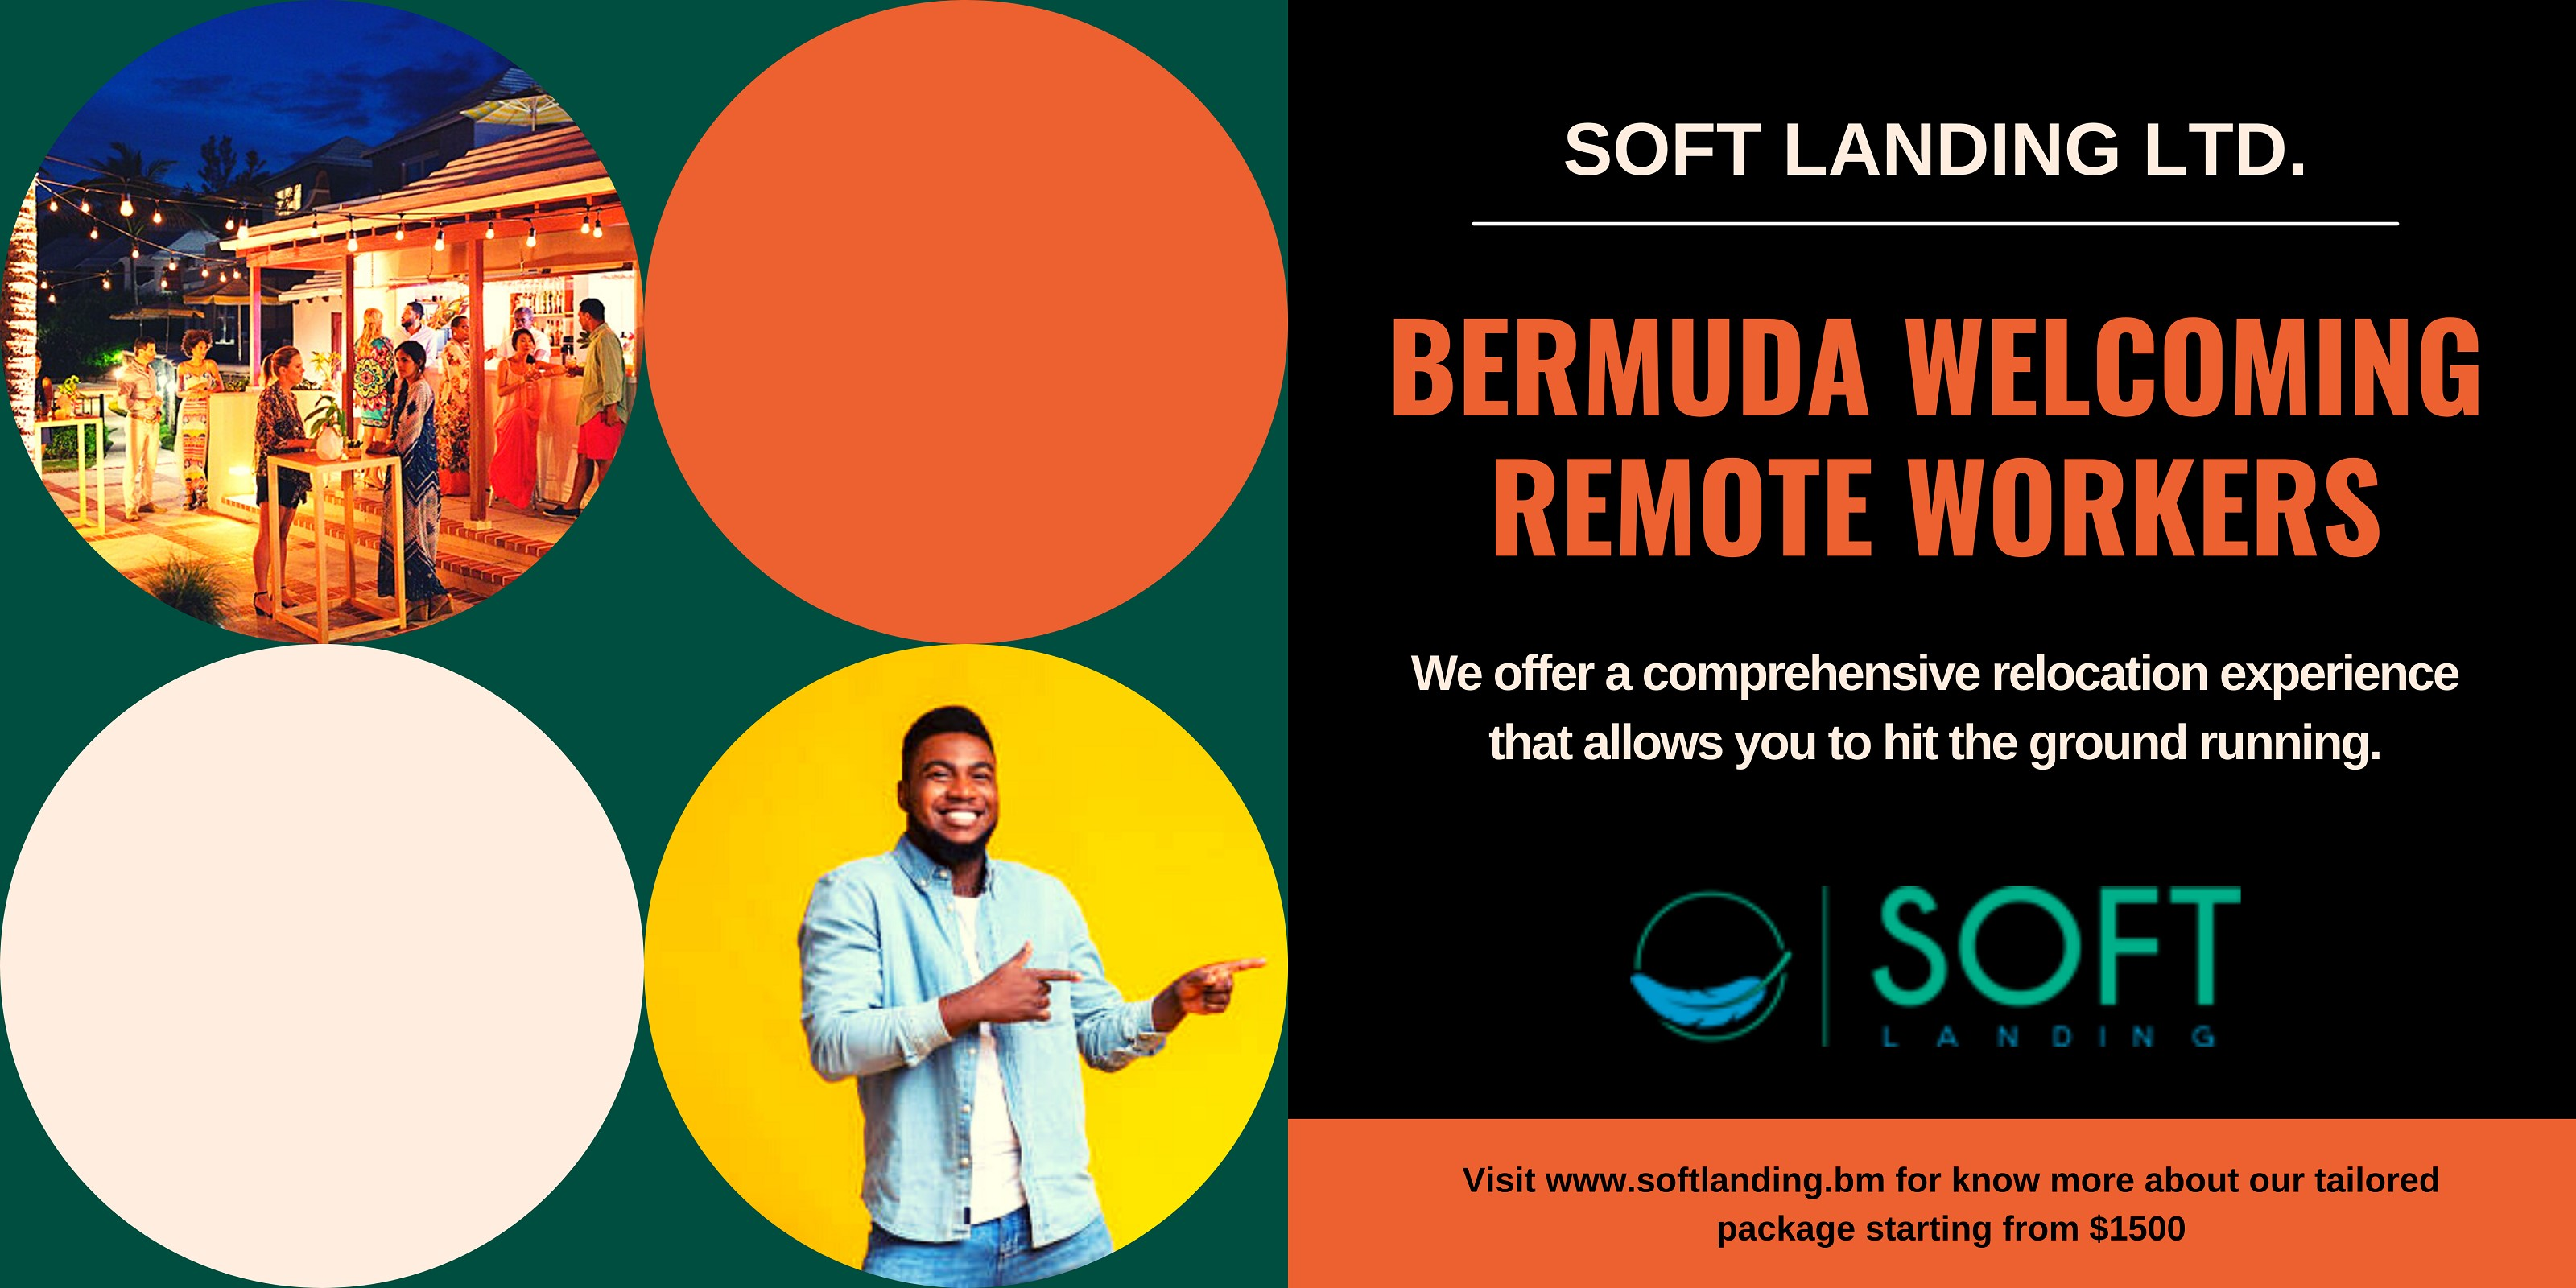 Moving To Bermuda With Soft Landing Ltd.